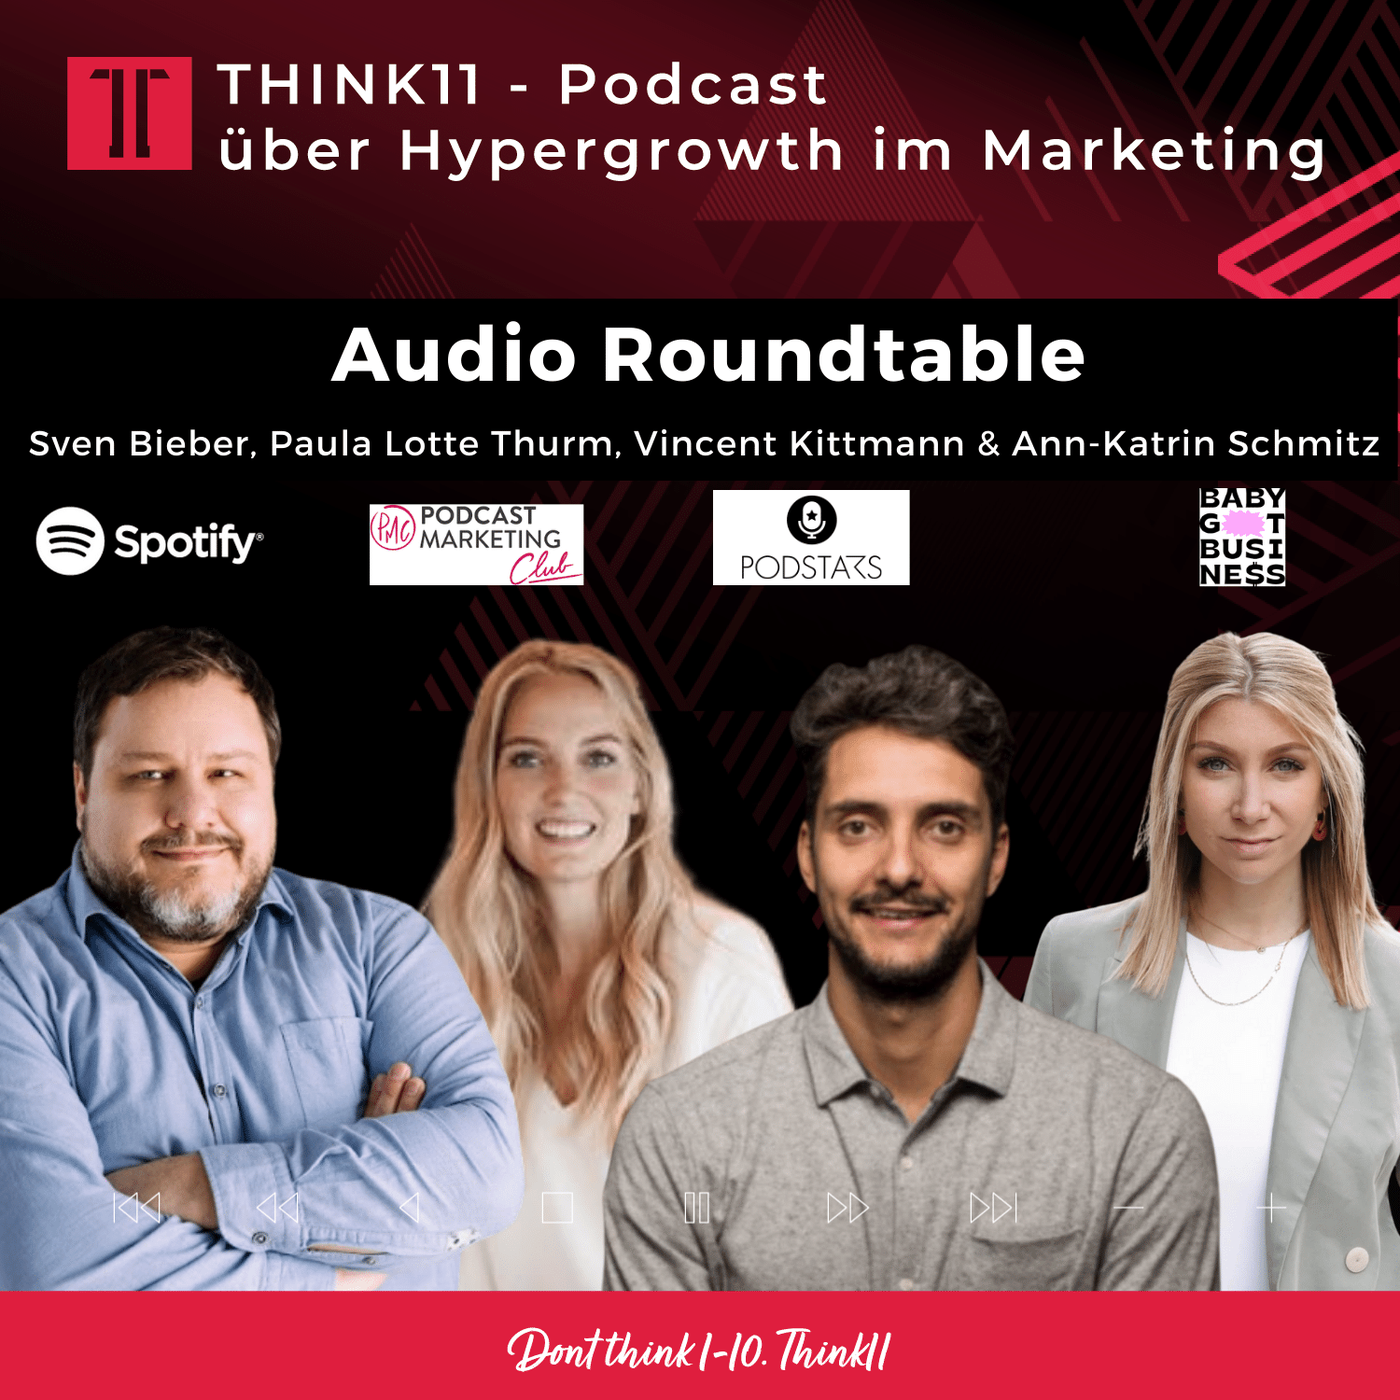 Think11- Audio Roundtable mit Sven Bieber, Paula Lotte Thurm, Vincent Kittmann und Ann-Kathrin Schmitz